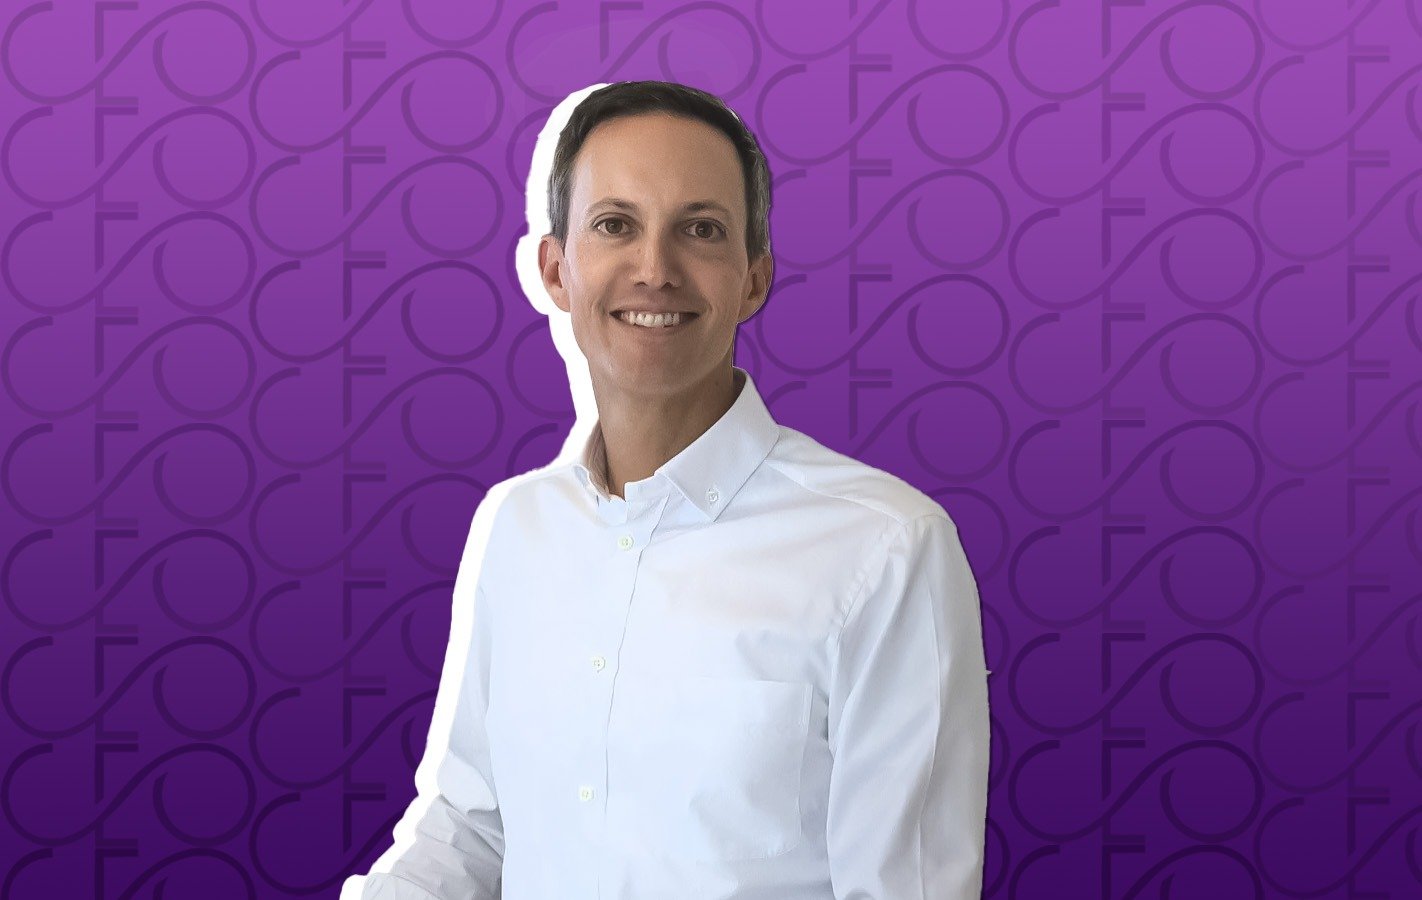 Gregg Throgmartin, the dynamic CEO of Skin Laundry